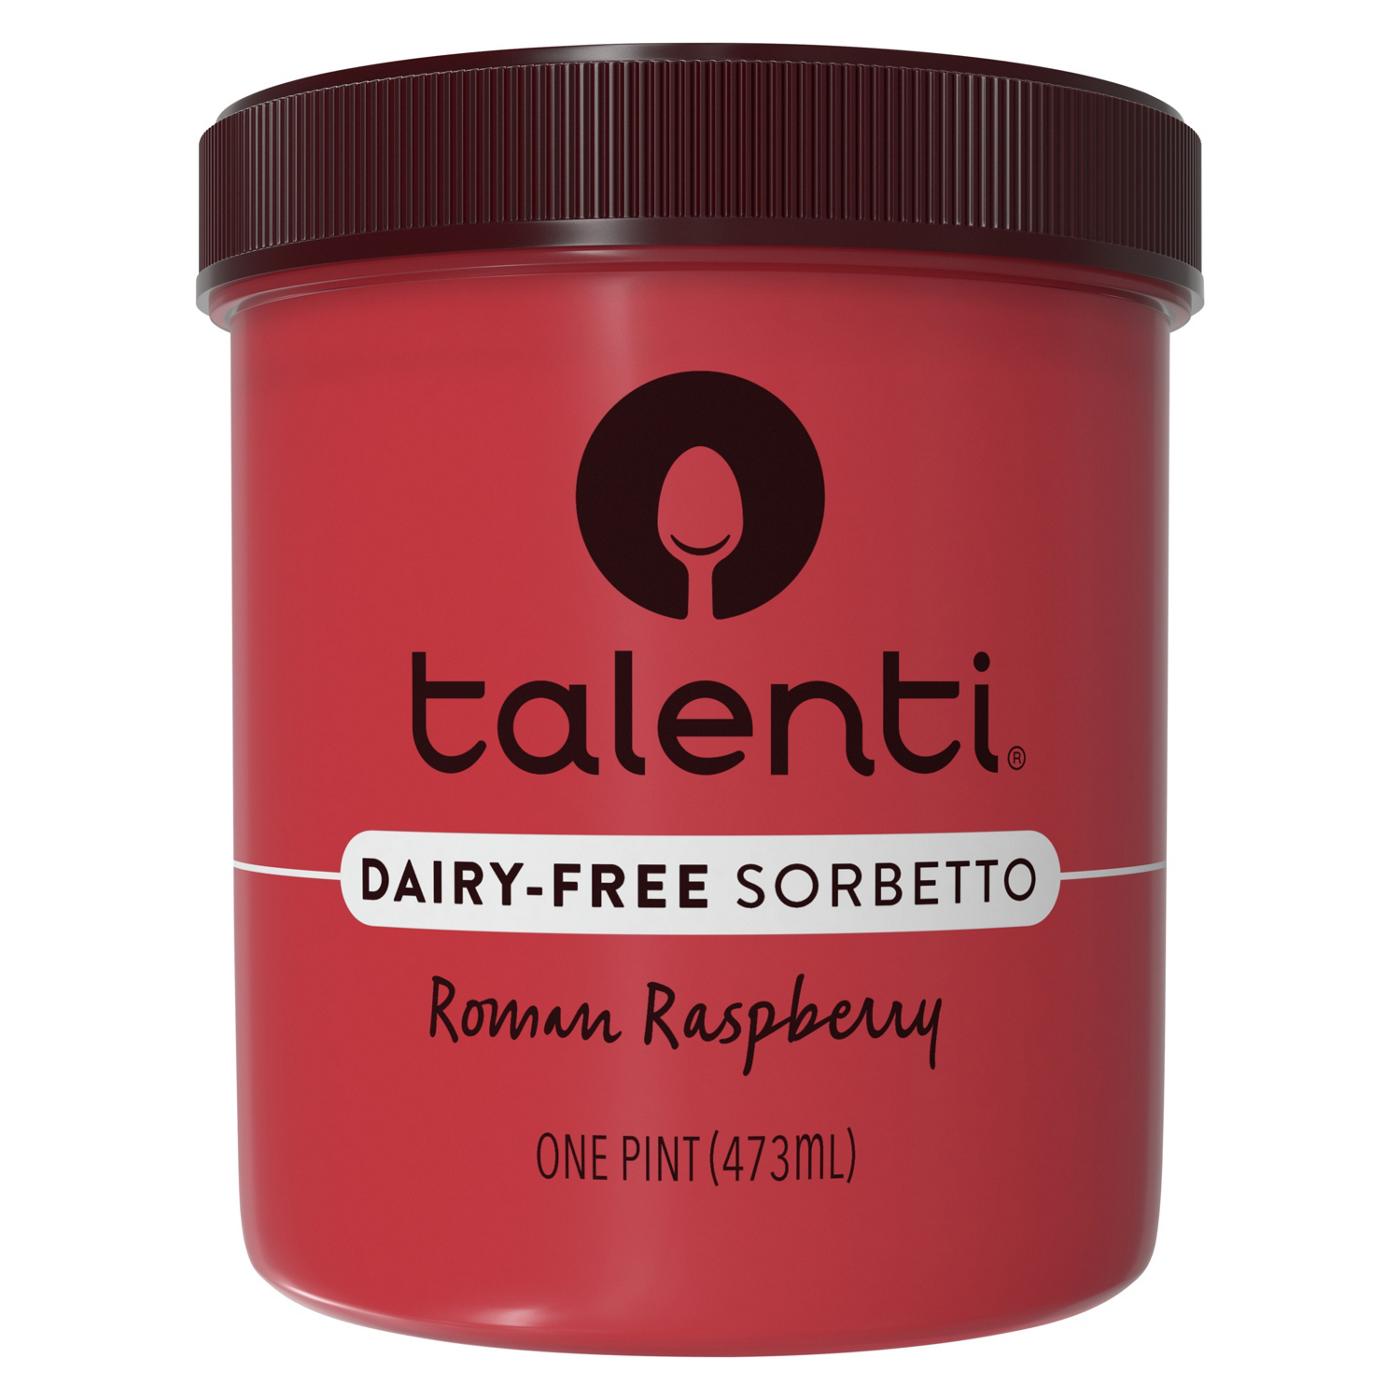 Talenti Roman Raspberry Dairy-Free Sorbetto; image 1 of 9